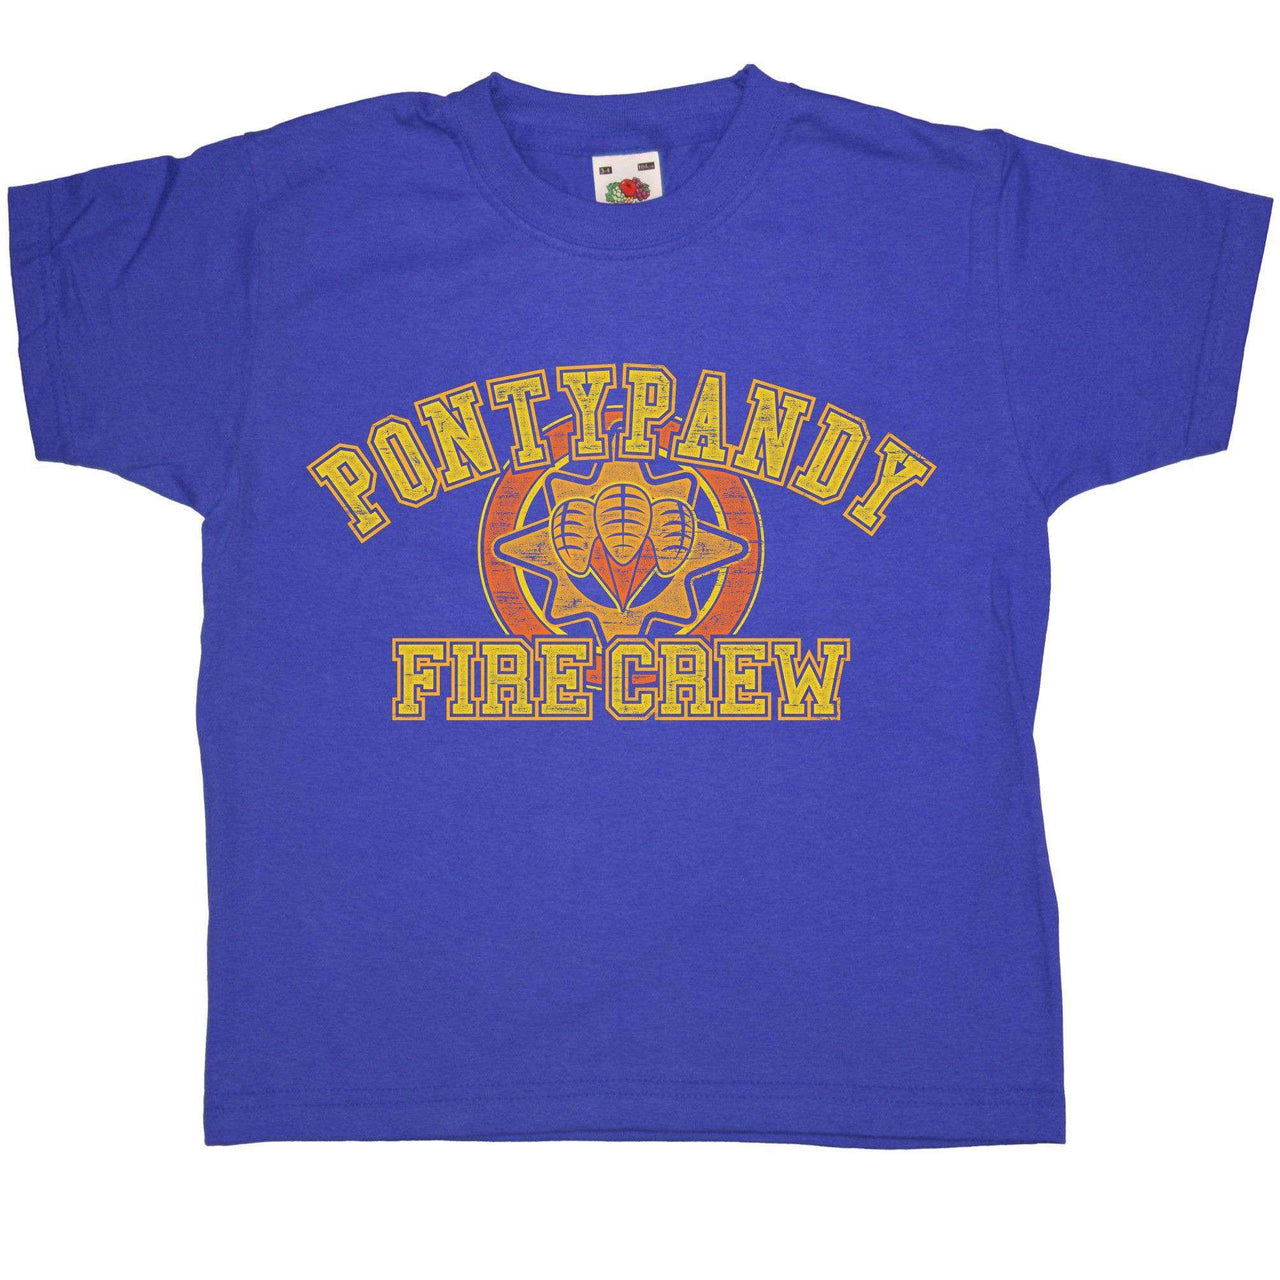 Pontypandy Fire Crew Kids Graphic T-Shirt 8Ball